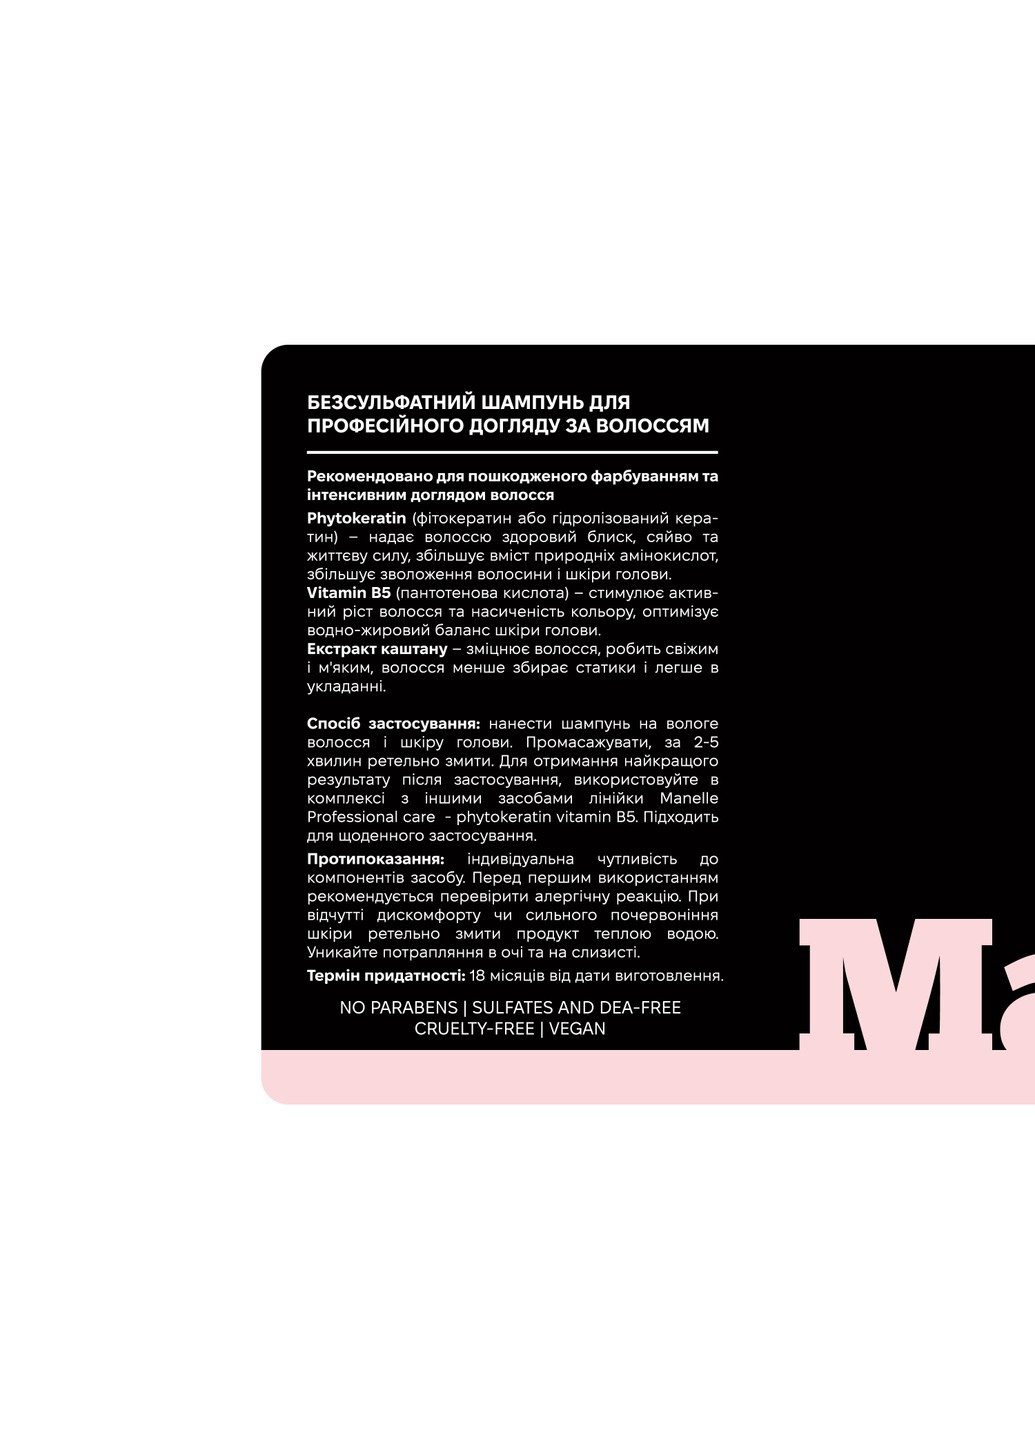 Бессульфатный шампунь Professional care phytokeratin vitamin B5 200 мл Manelle (269238159)